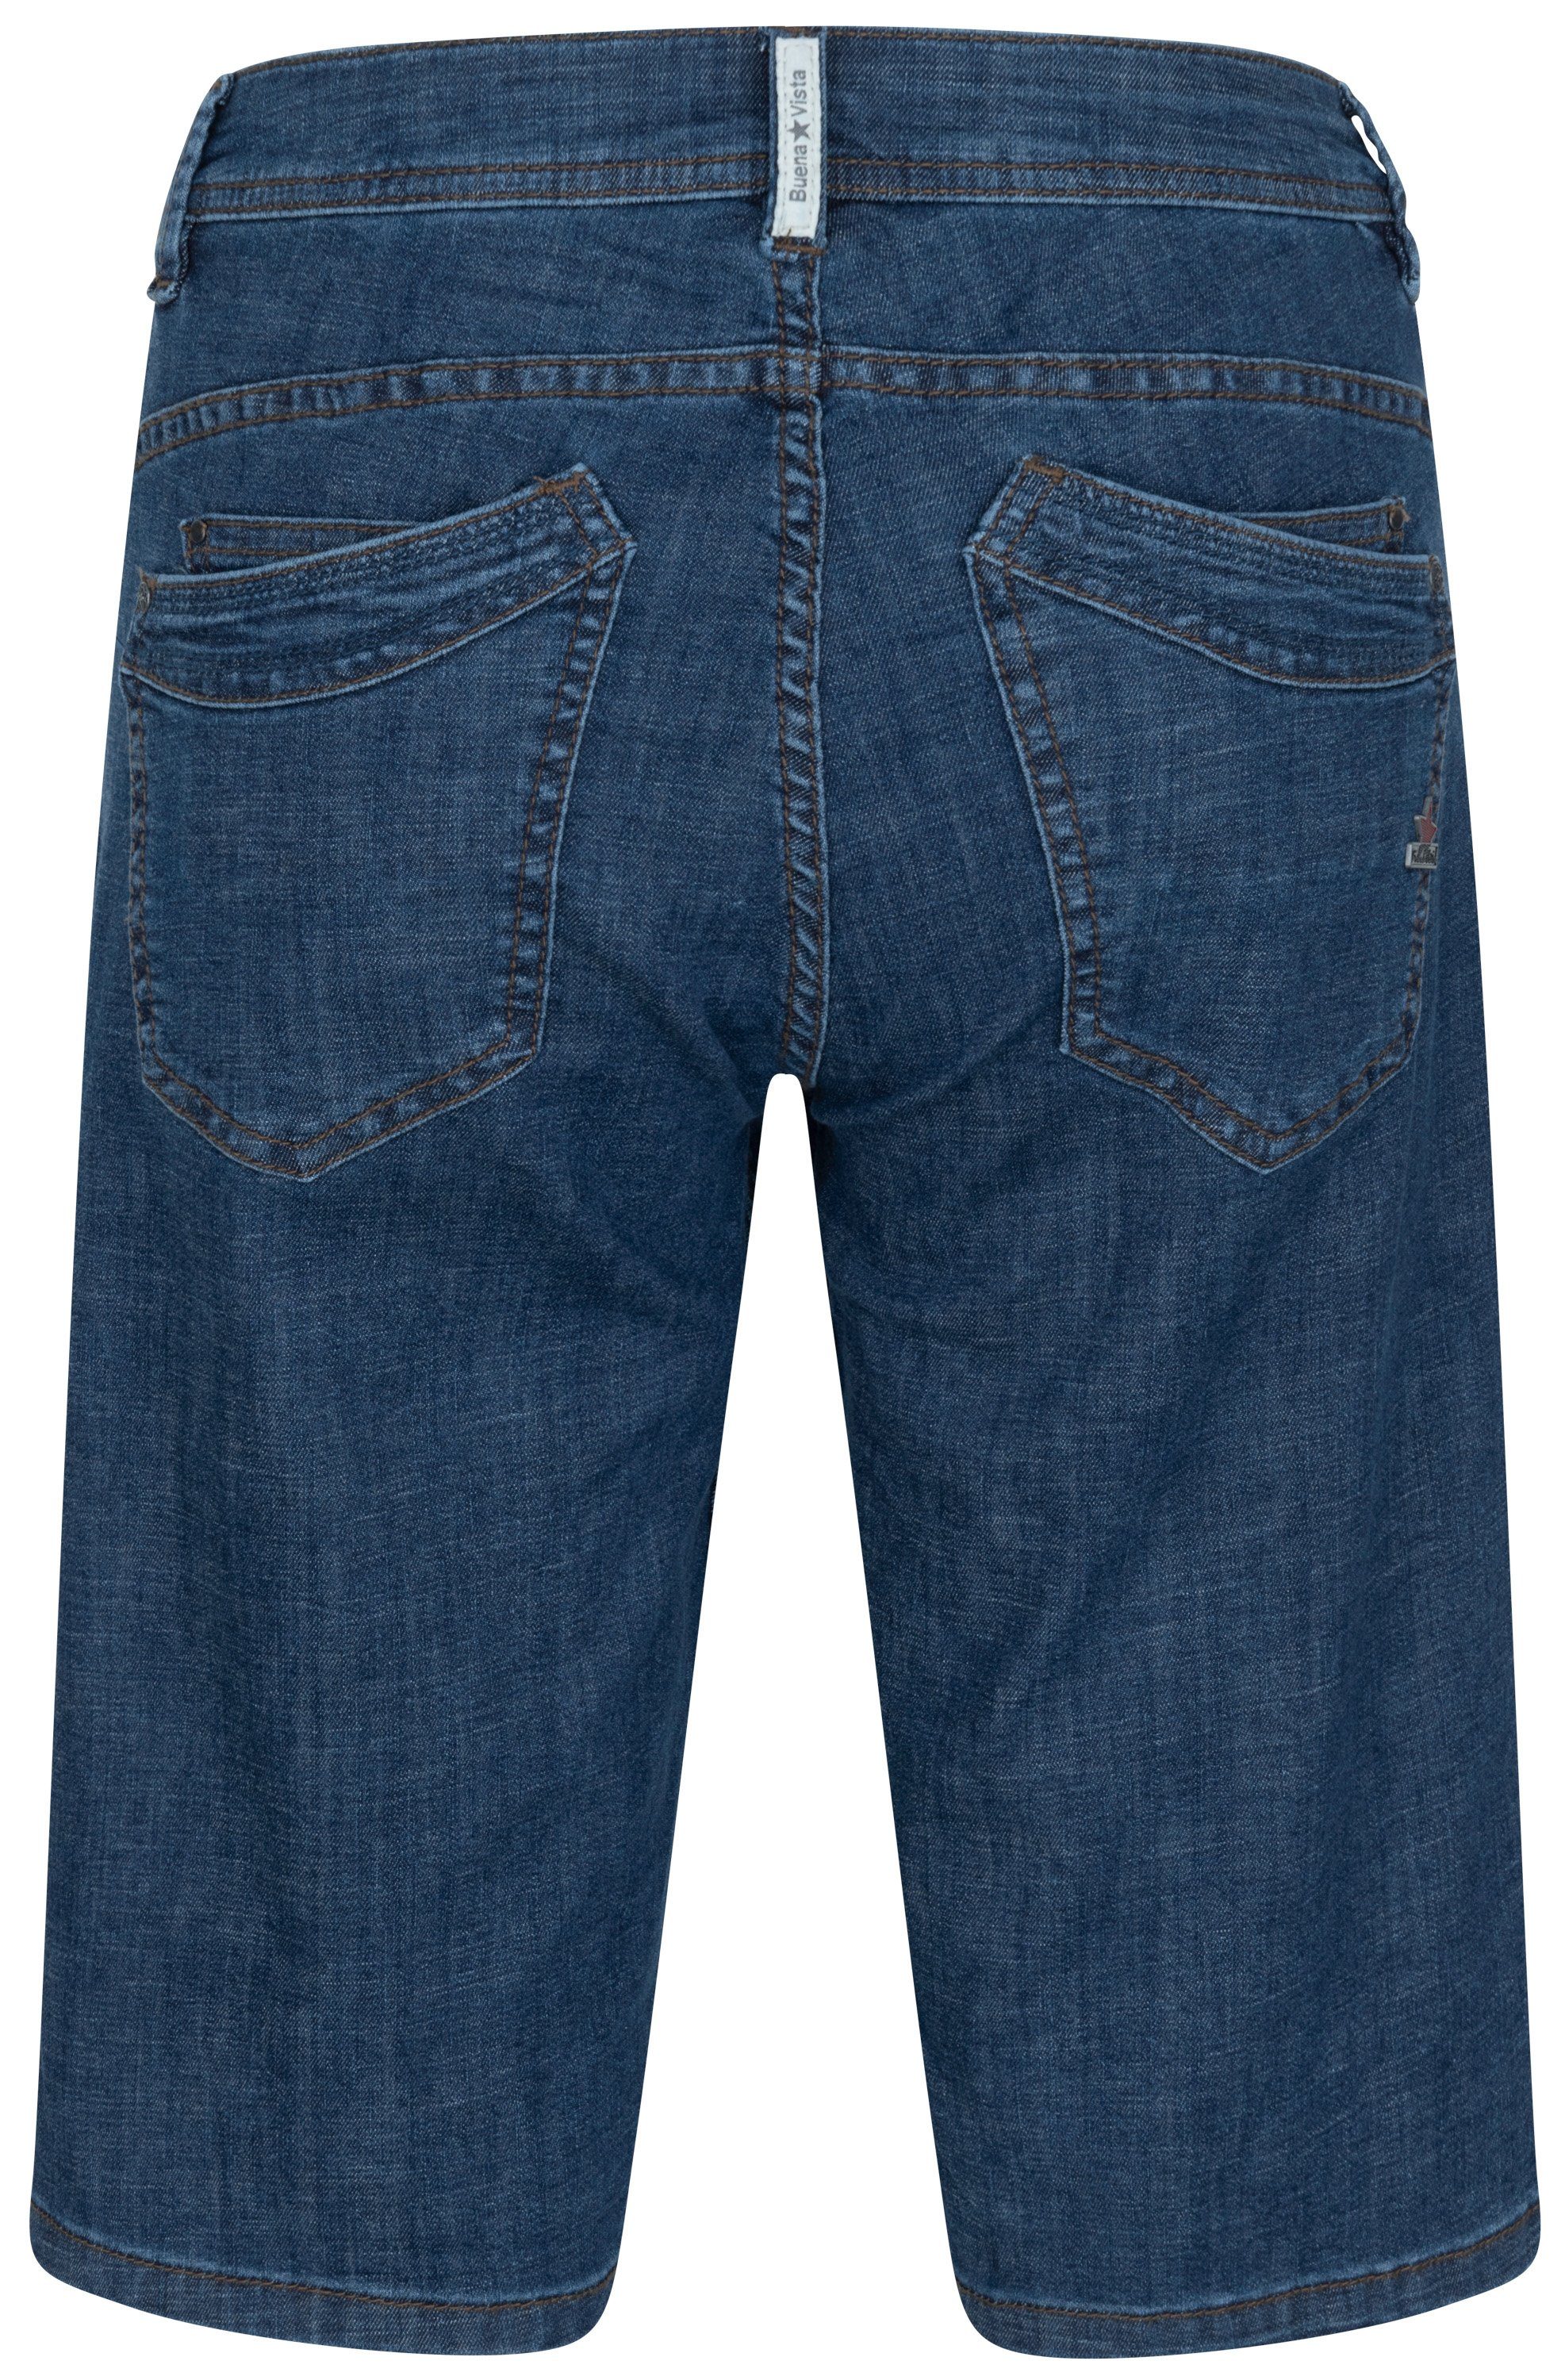 SHORT Denim stone Stretch-Jeans MALIBU B5025 347.5013 dark - Vista 2304 VISTA Buena BUENA Cross